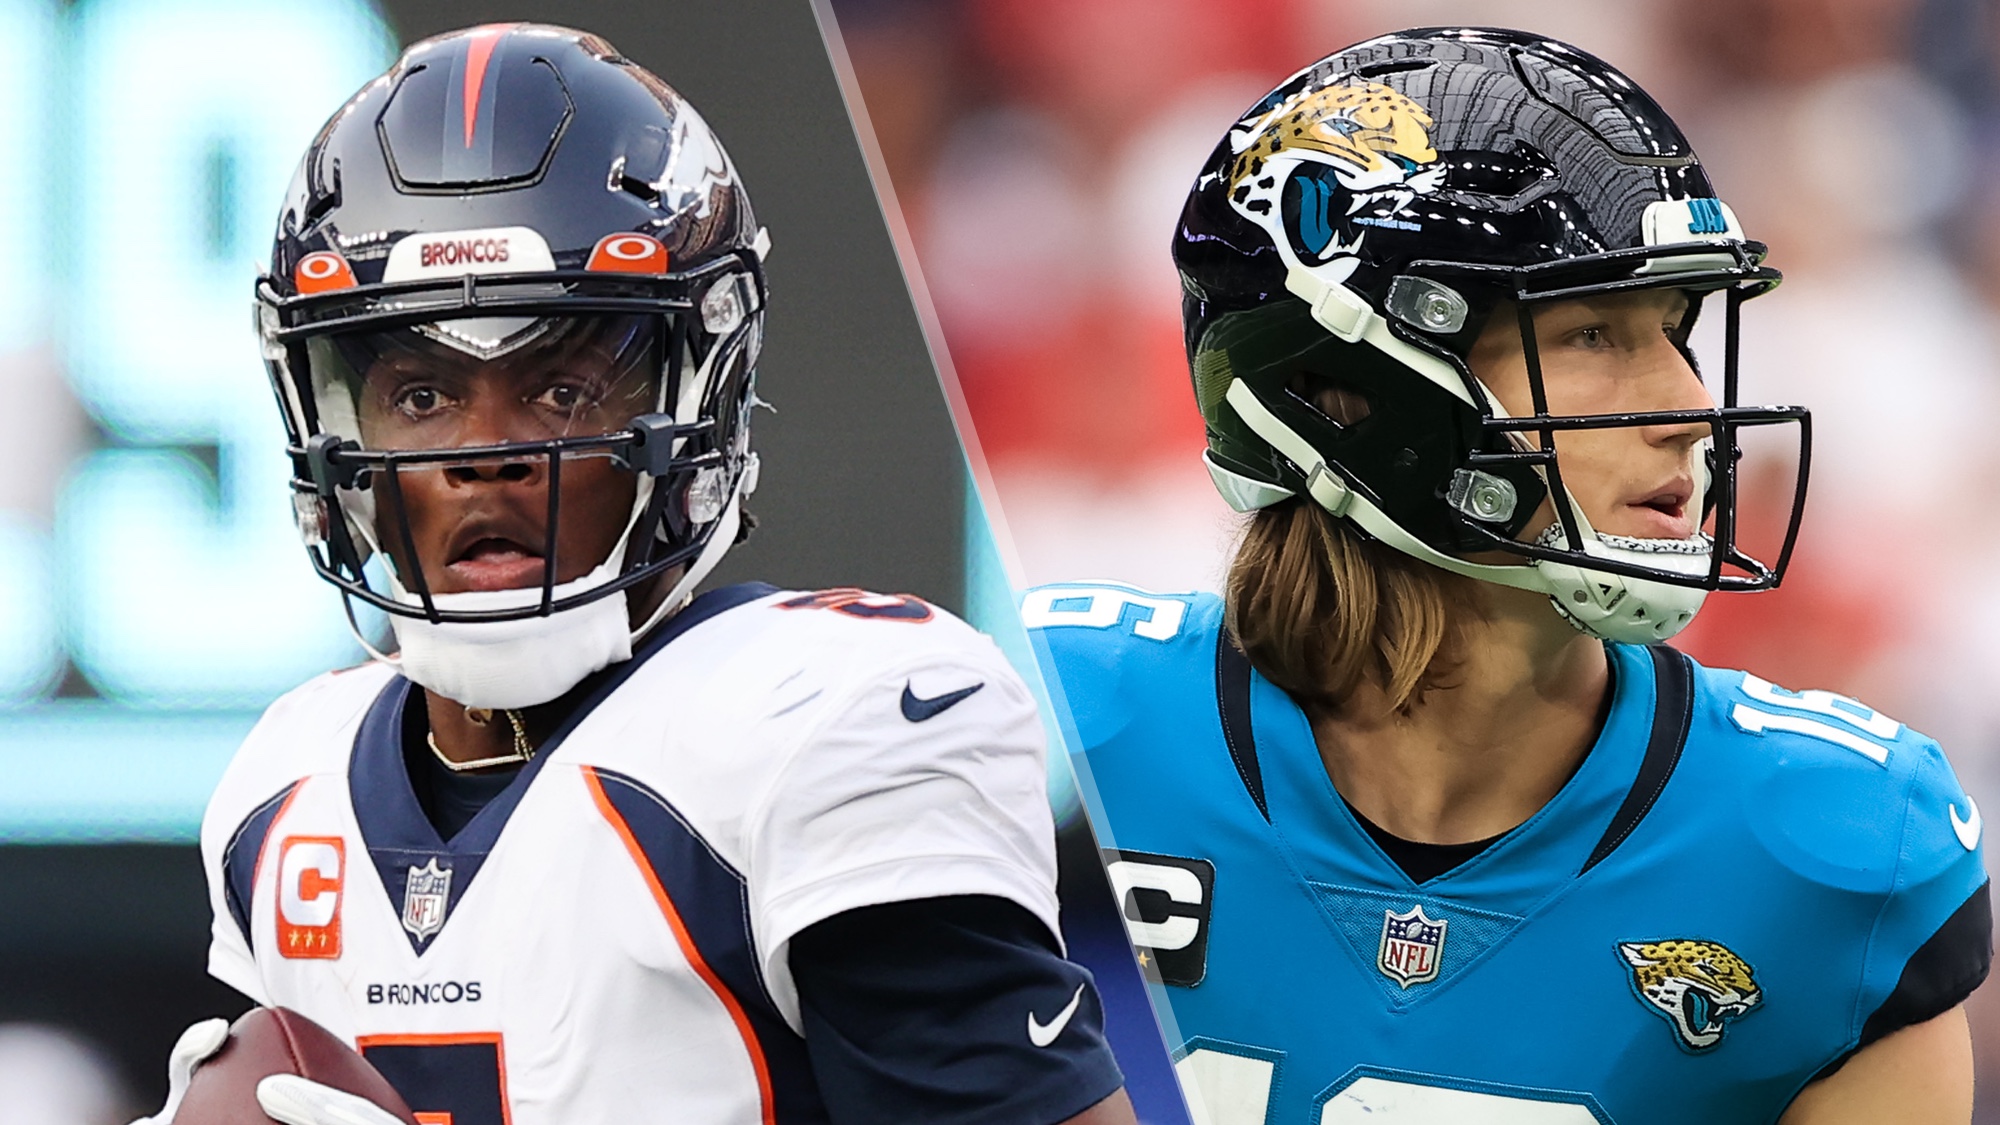 Broncos vs Jaguars live stream: How to watch NFL week 2 game online